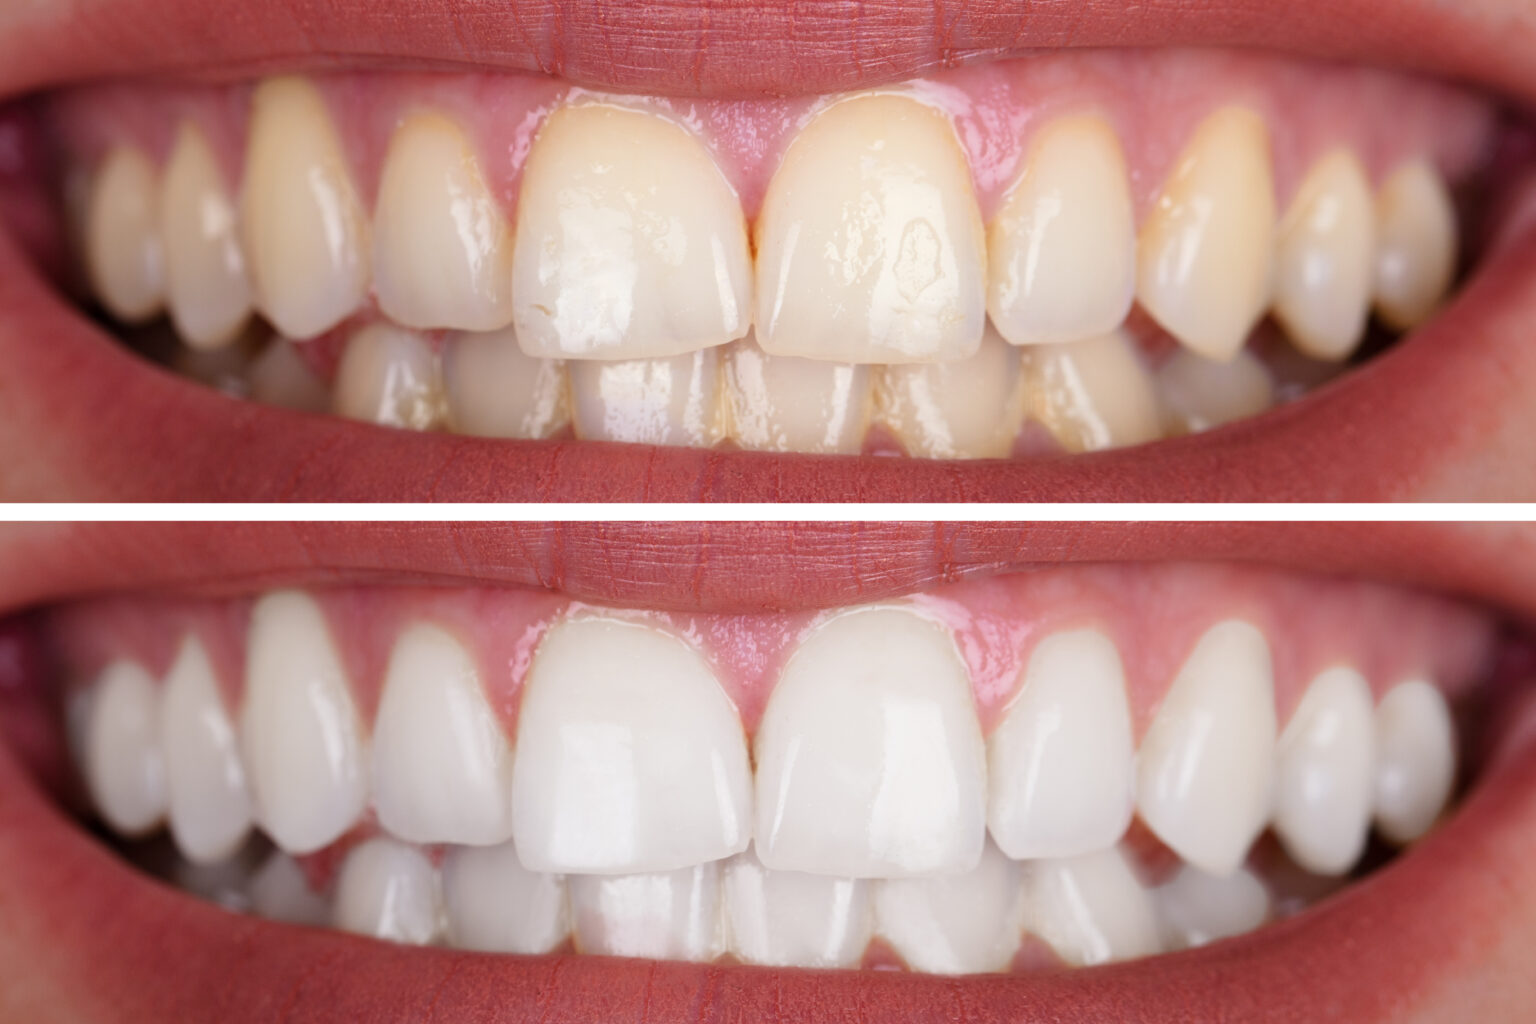 Teeth whitening laser or trays